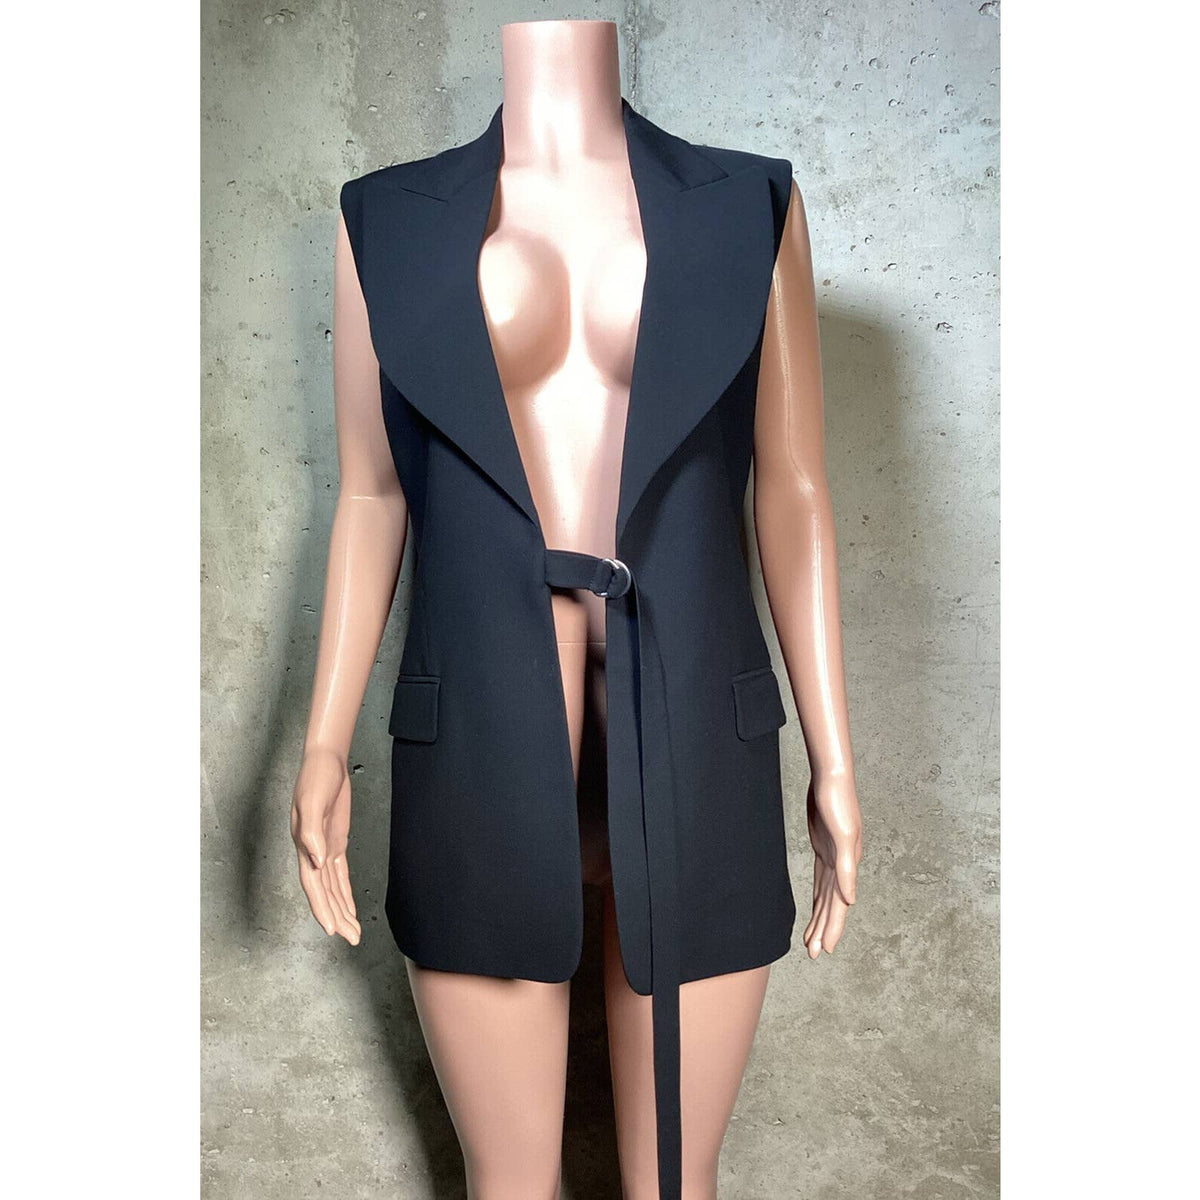 Michael Kors Collection 100% Virgin Wool Black Vest Sz.10